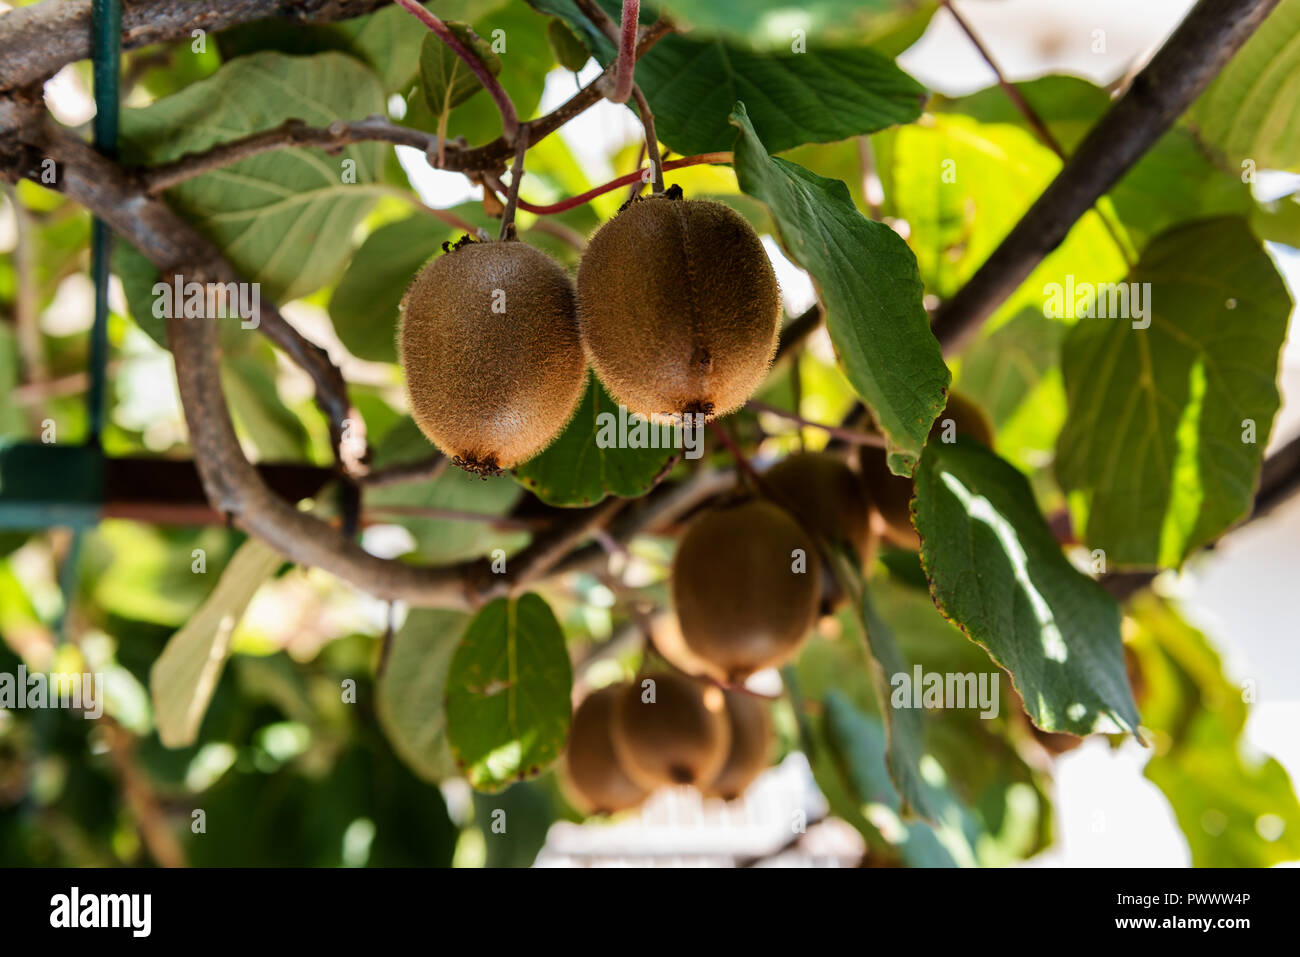 https://c8.alamy.com/comp/PWWW4P/organic-kiwi-fruit-growing-in-a-small-garden-PWWW4P.jpg